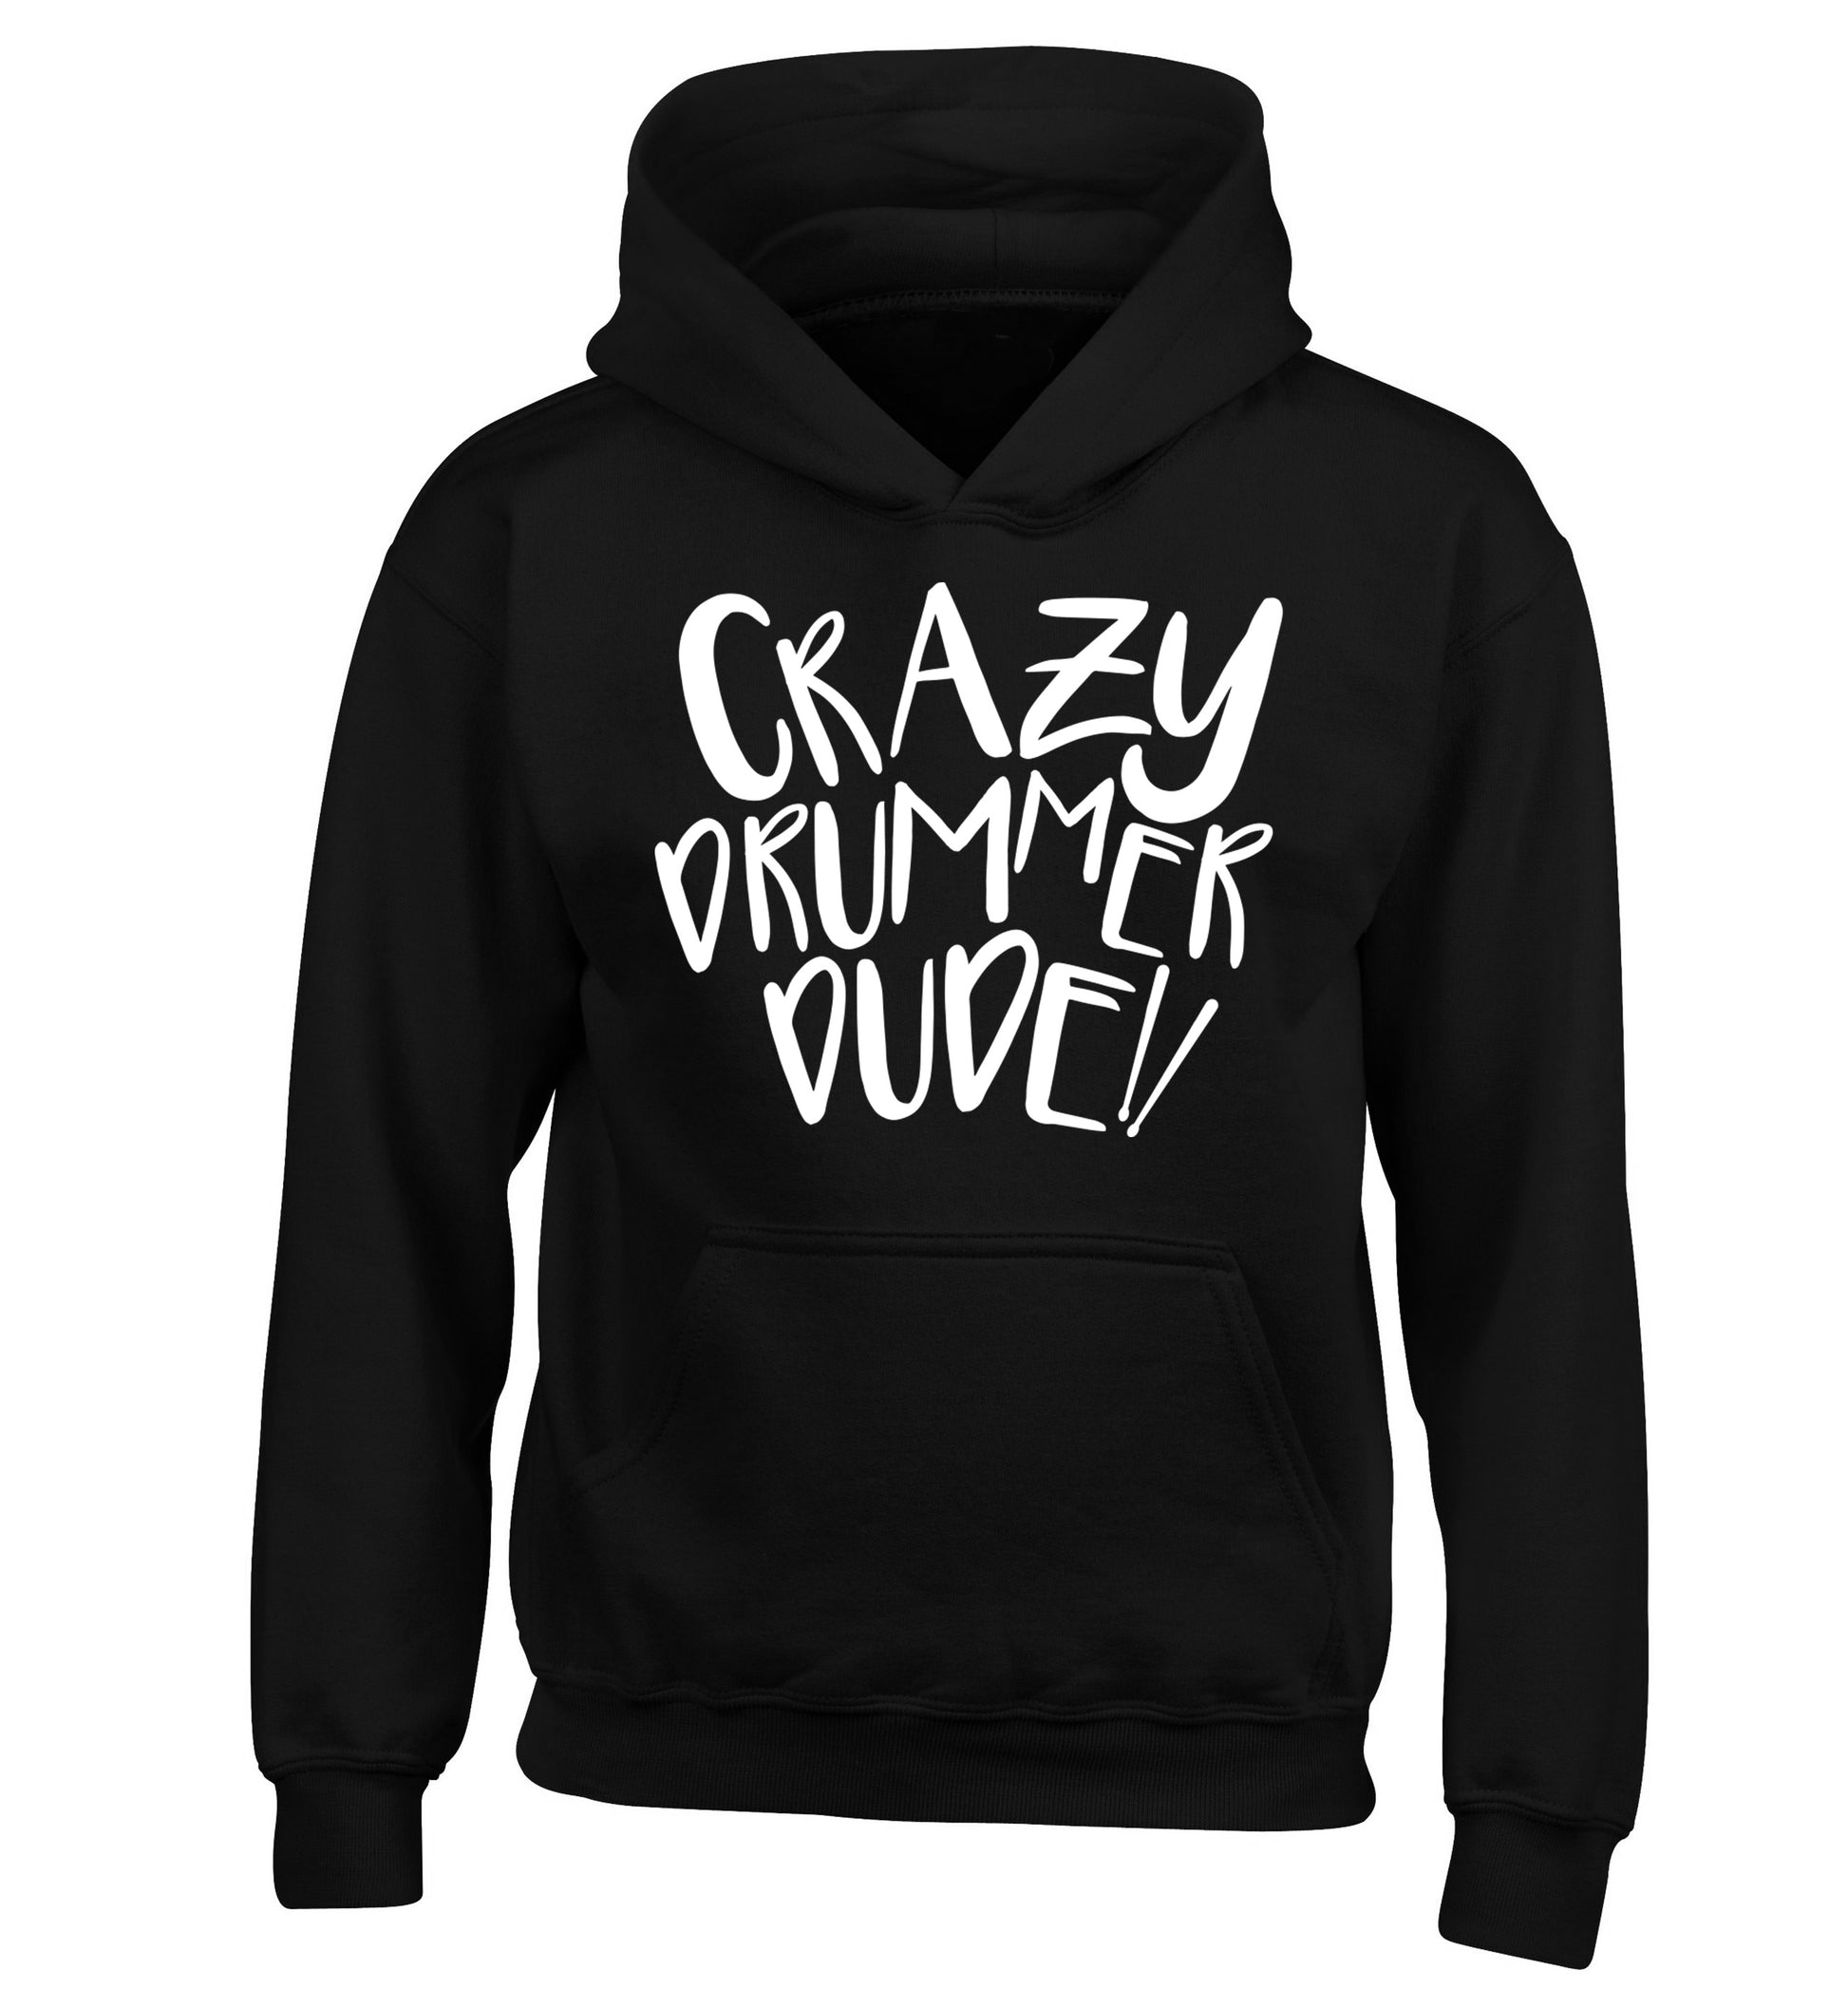 Crazy drummer dude children's black hoodie 12-14 Years